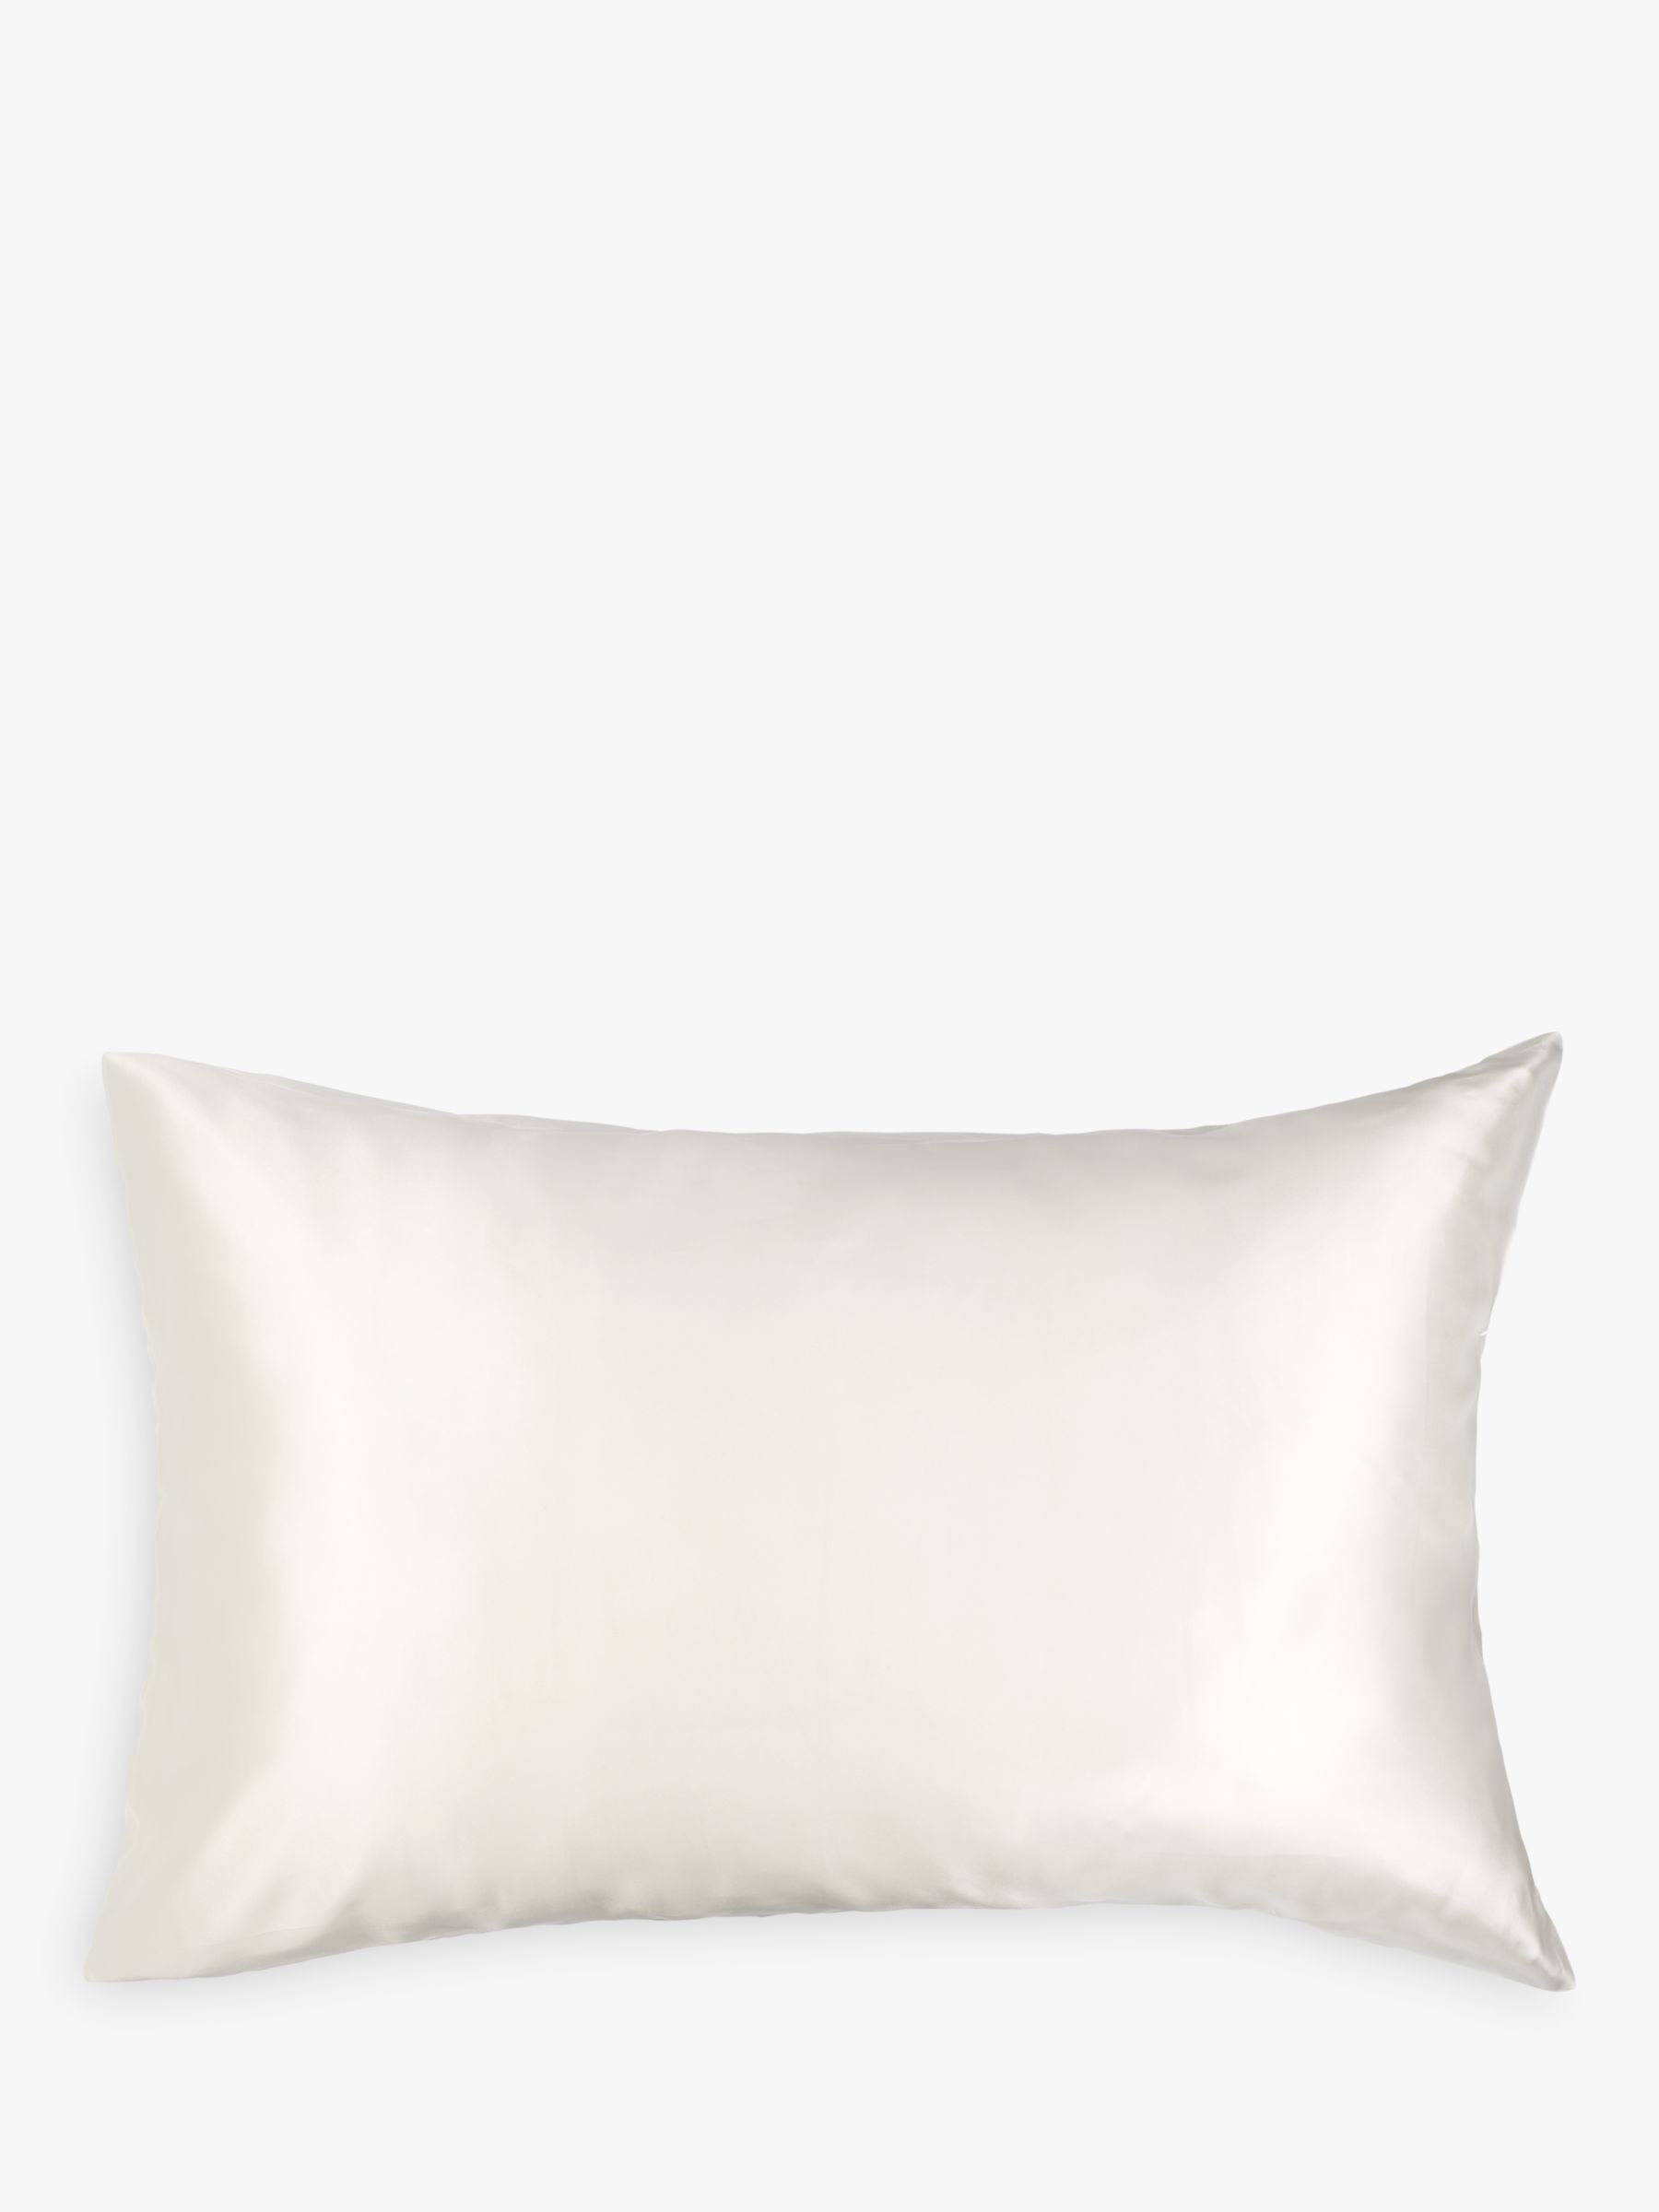 John Lewis Silk Standard Pillowcase 120031